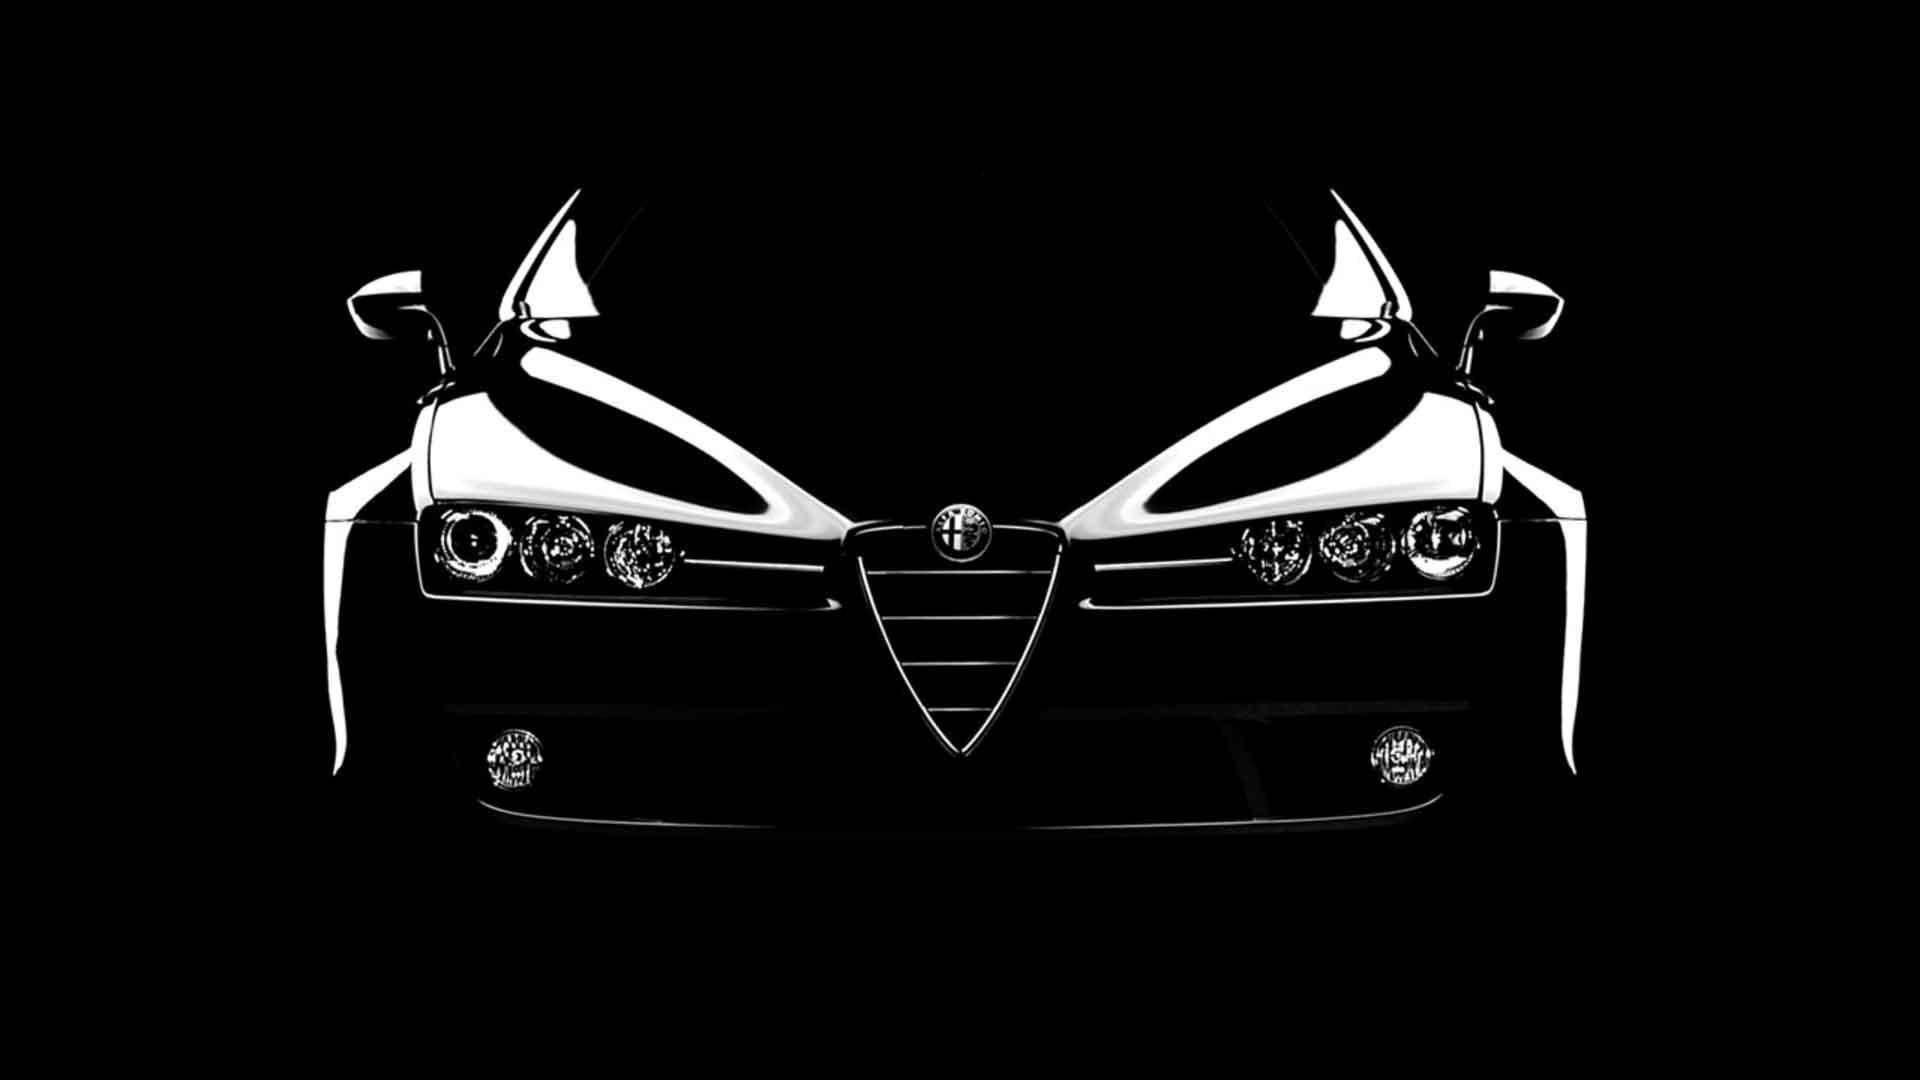 ALFA ROMEO 159 WALLPAPER HIGH RESOLUTION victor. Alfa Romeo classic